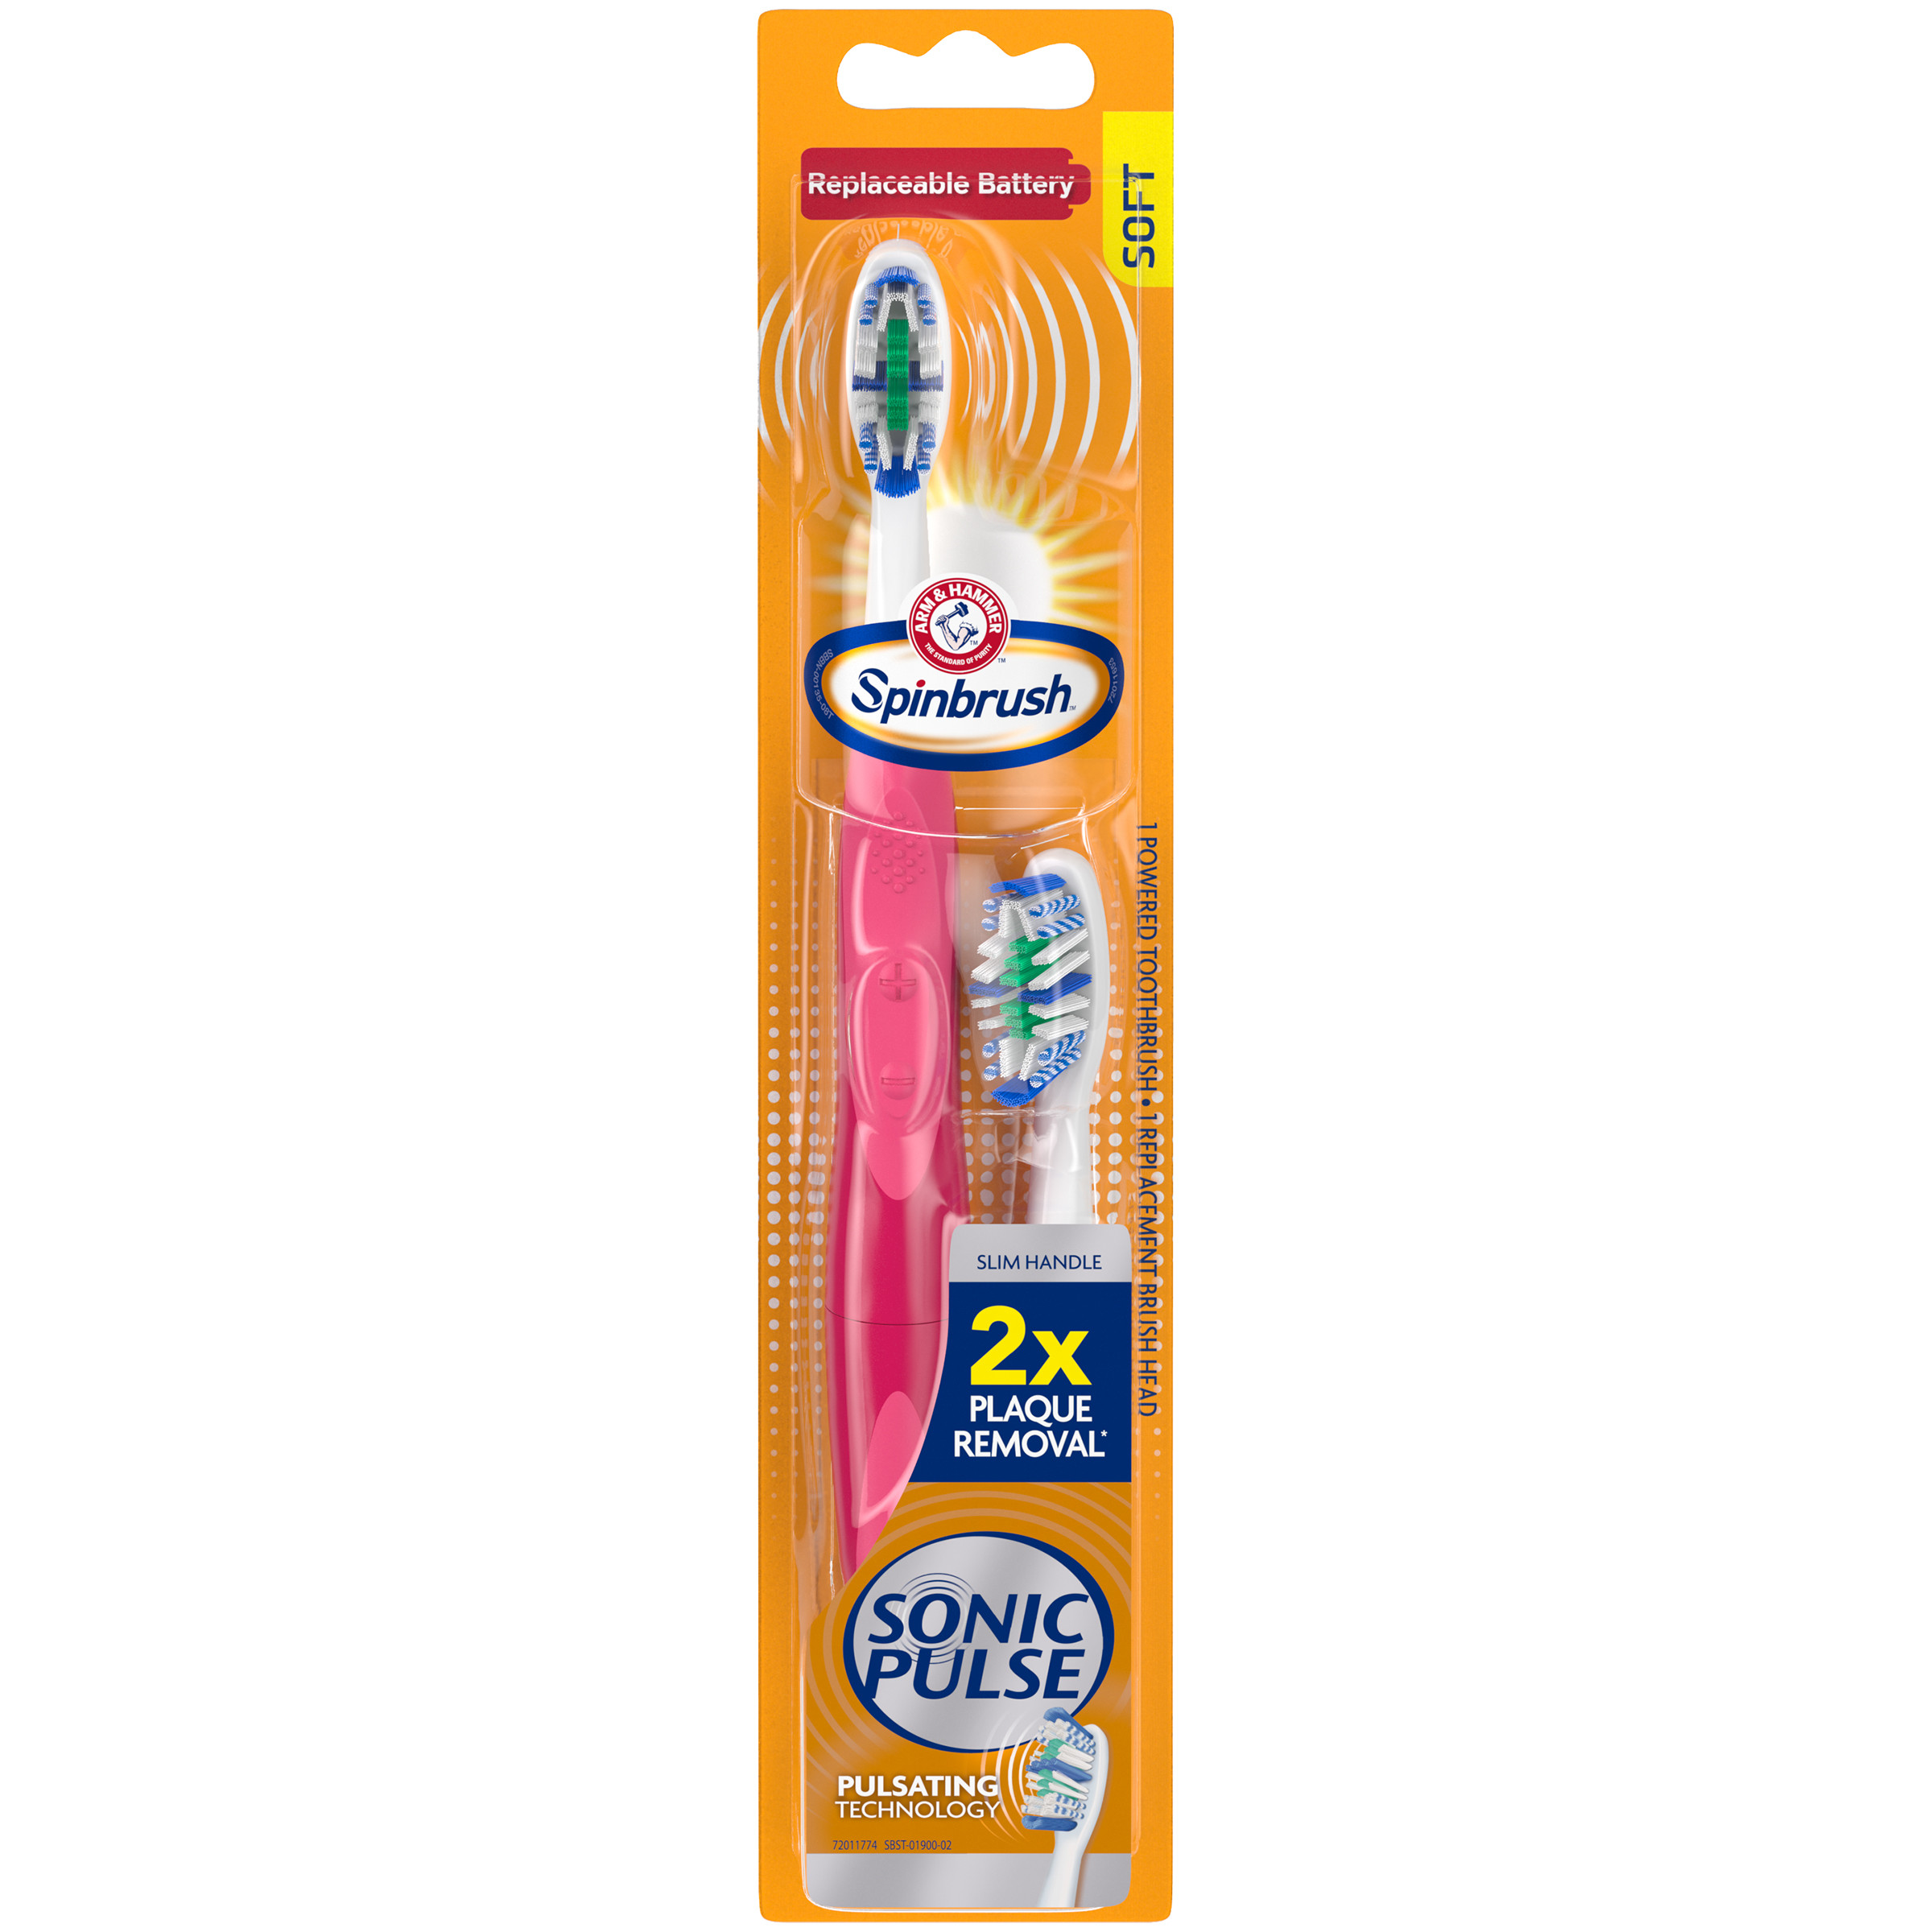 Arm & Hammer Spinbrush Sonic Pulse Battery Toothbrush, Soft - image 1 of 8